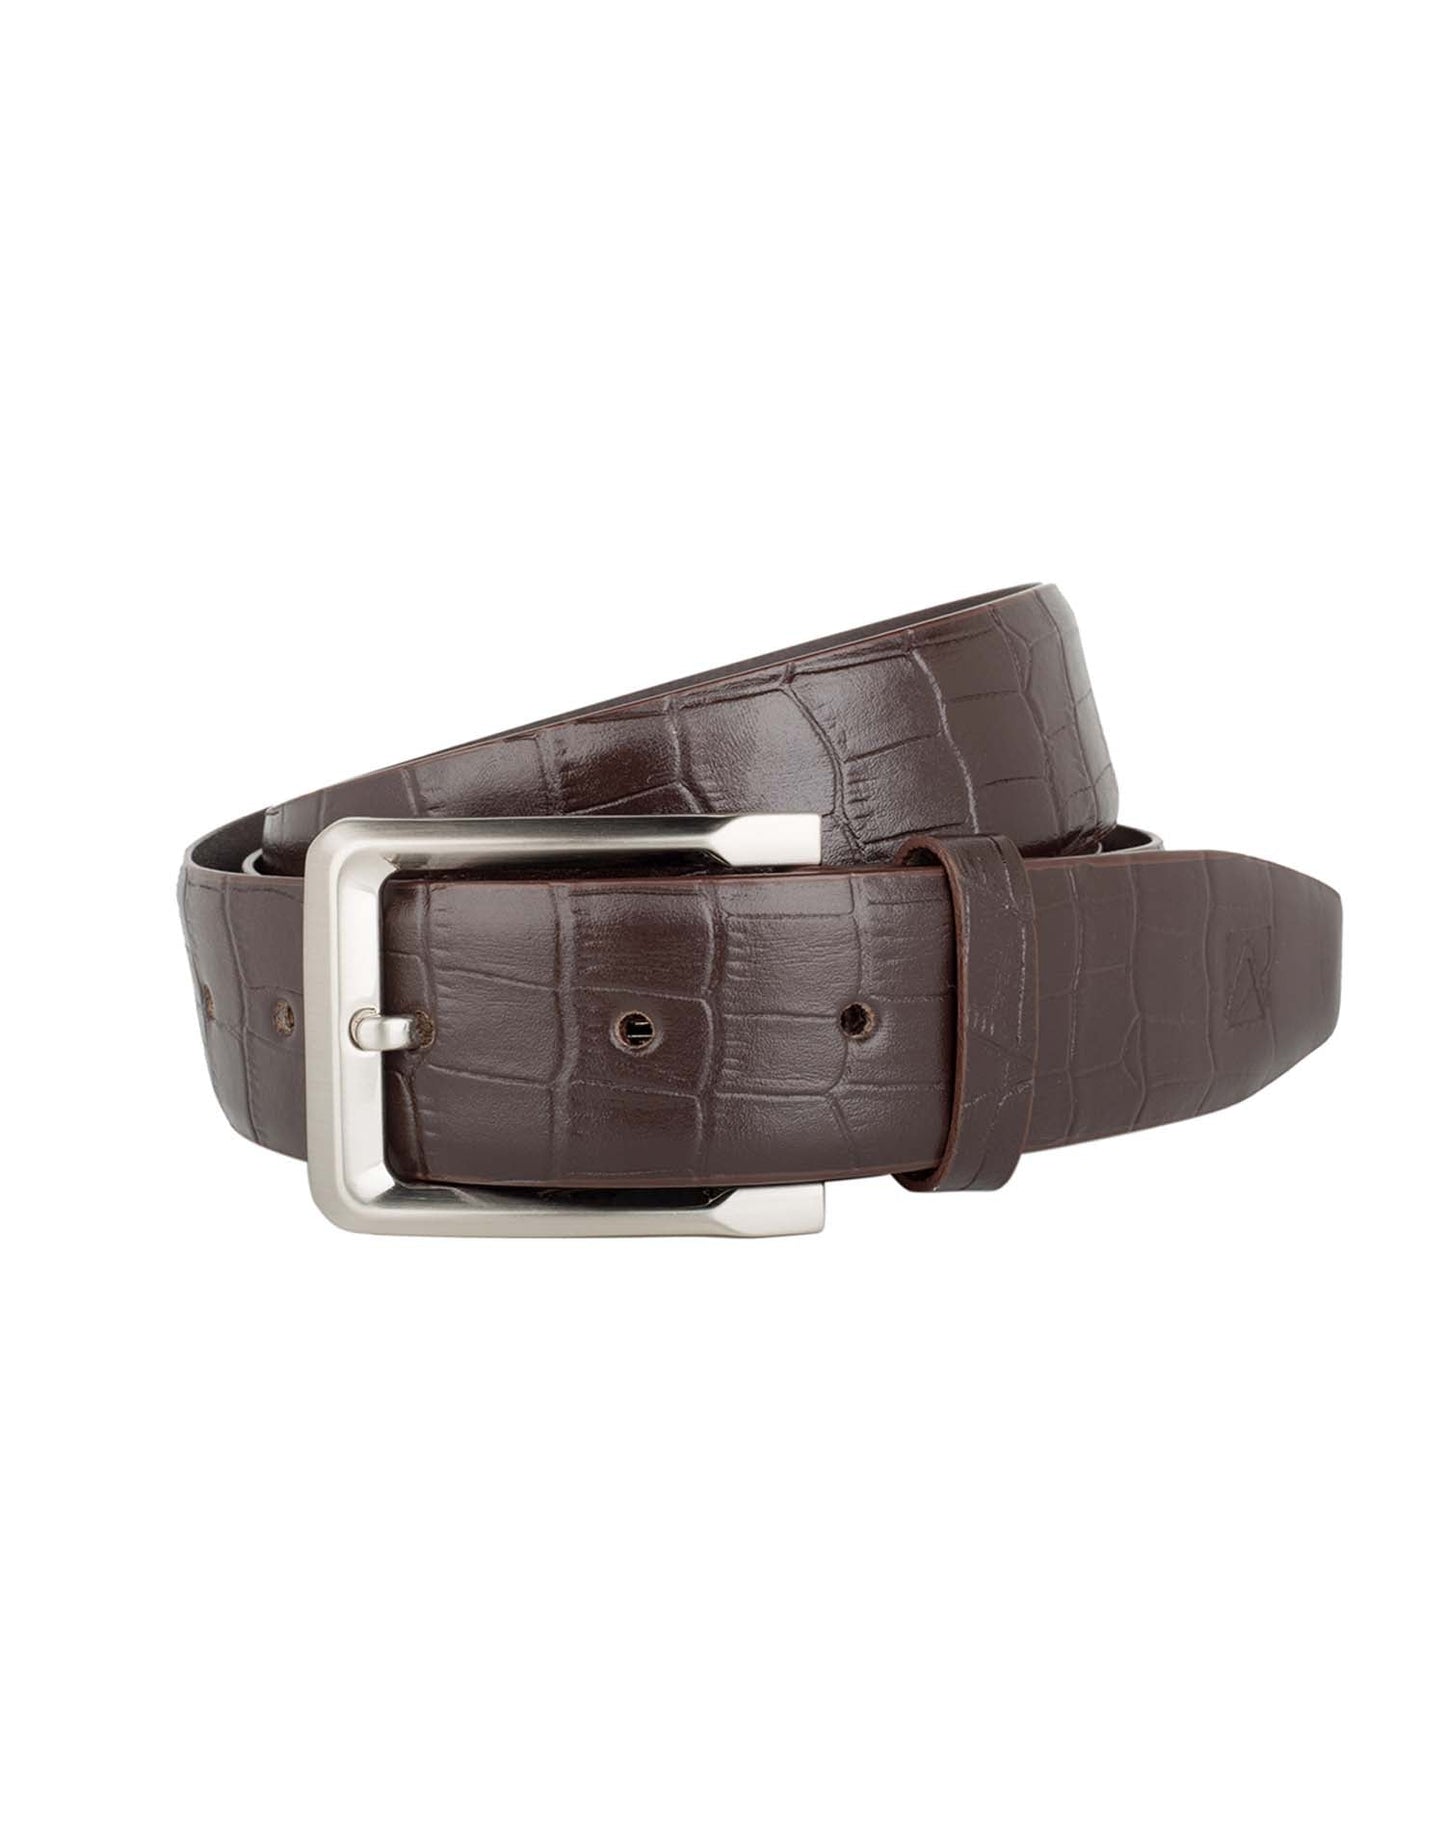 CLASSIC CROC Patterned Leather Belt ARB1012BR ARCADIO